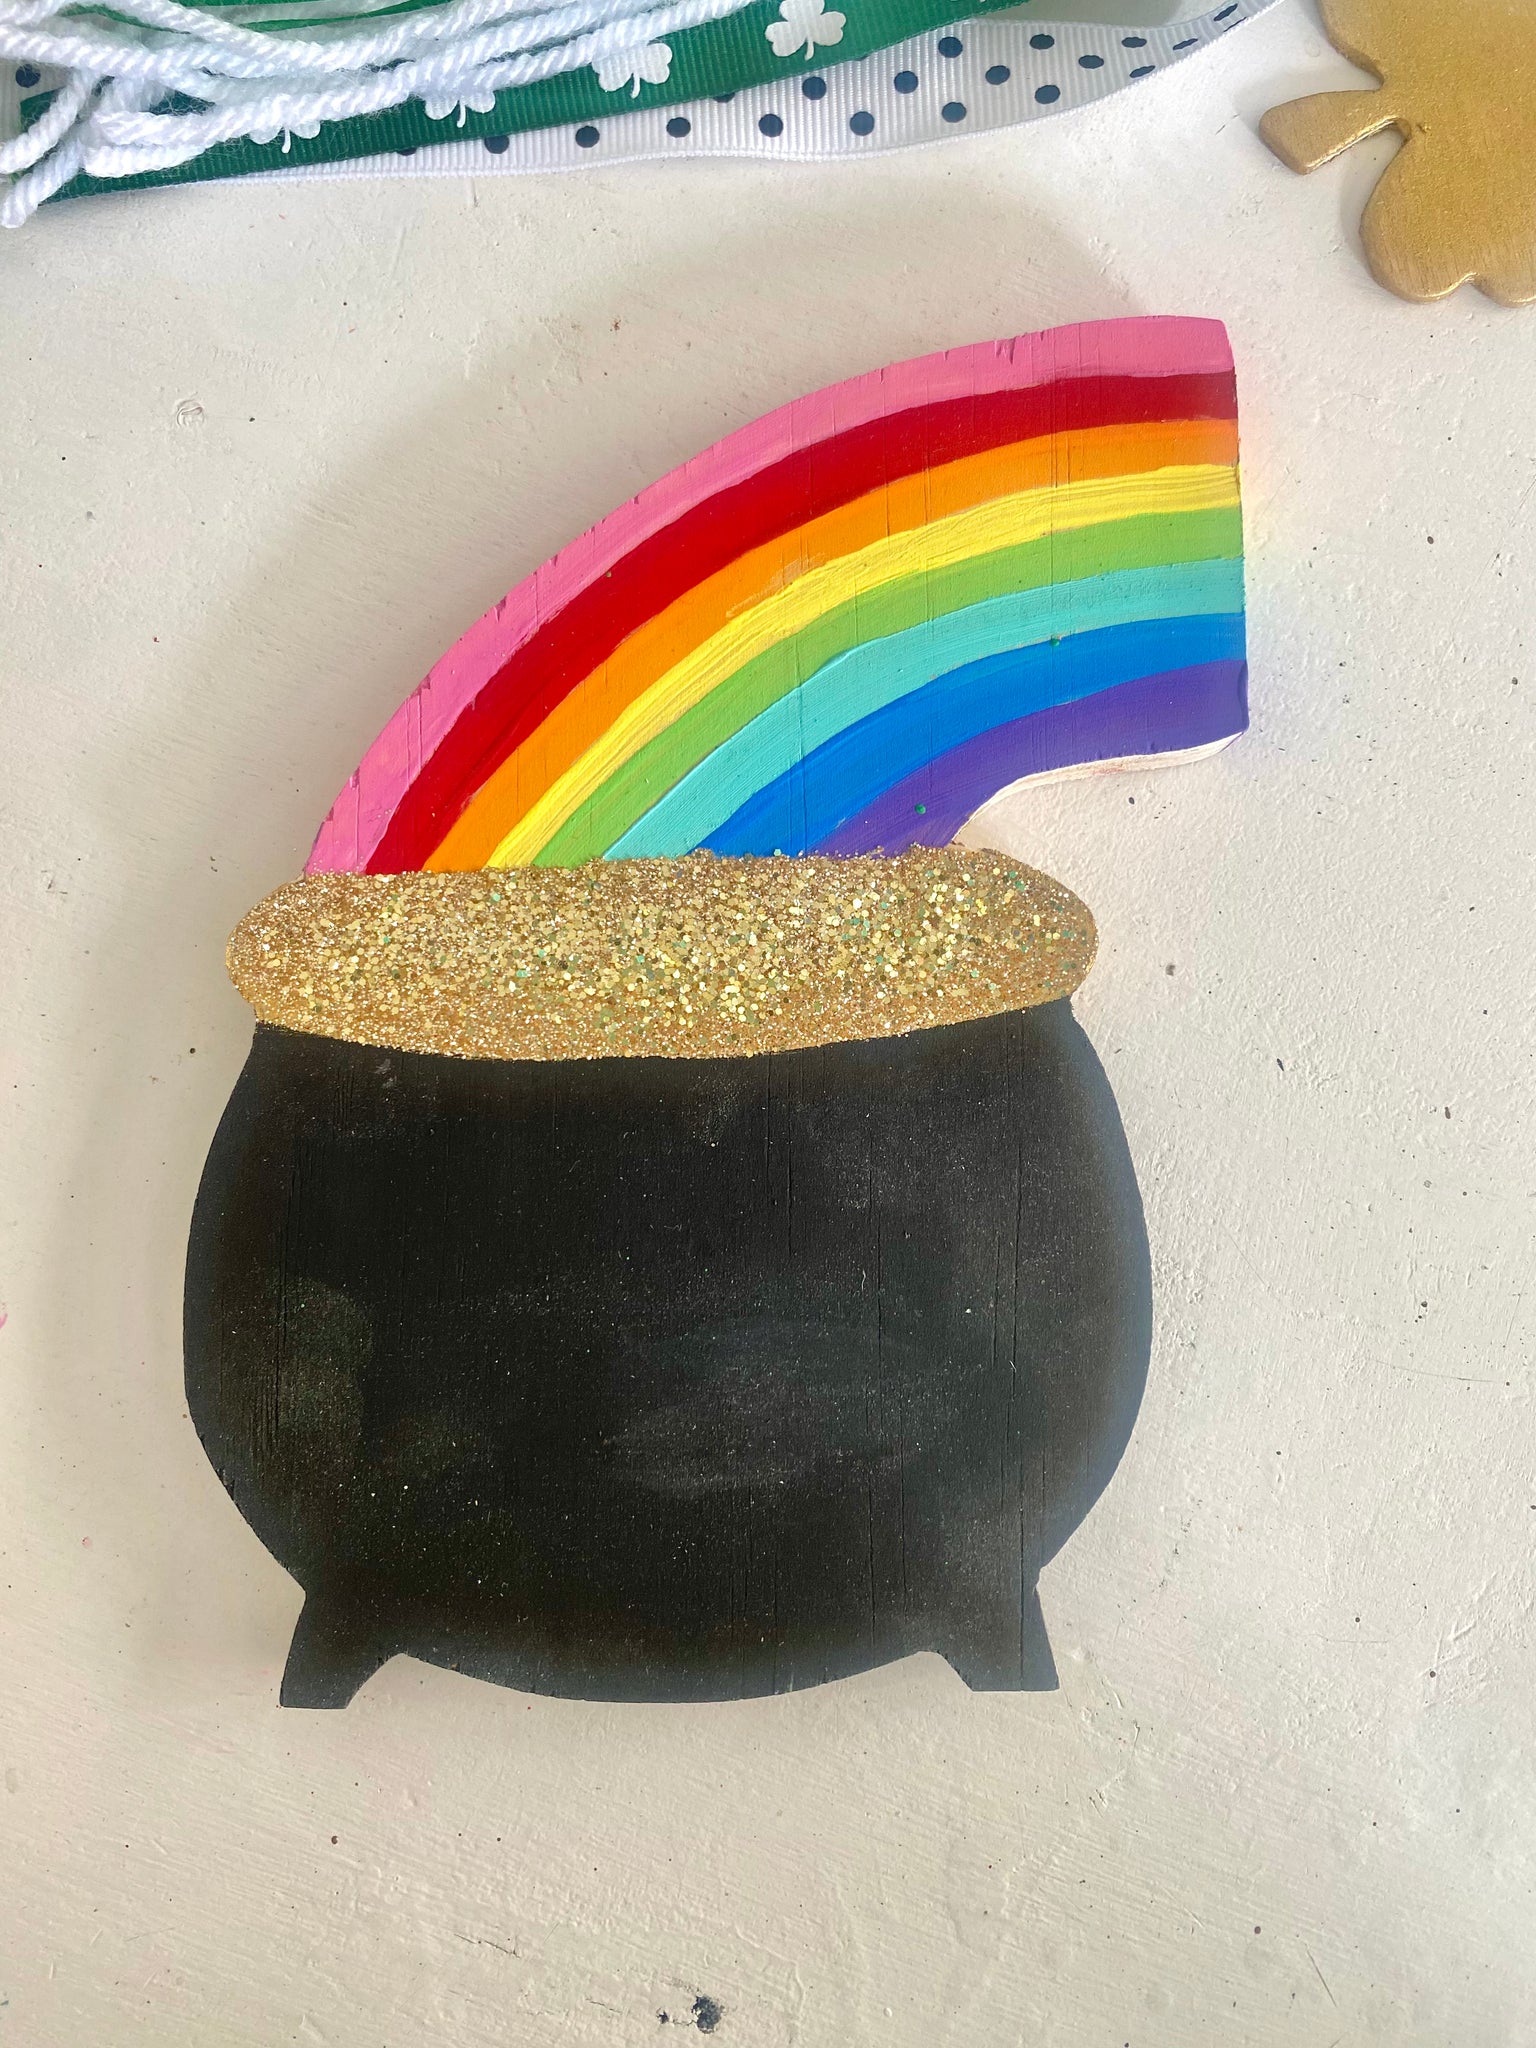 Rainbow pot of gold